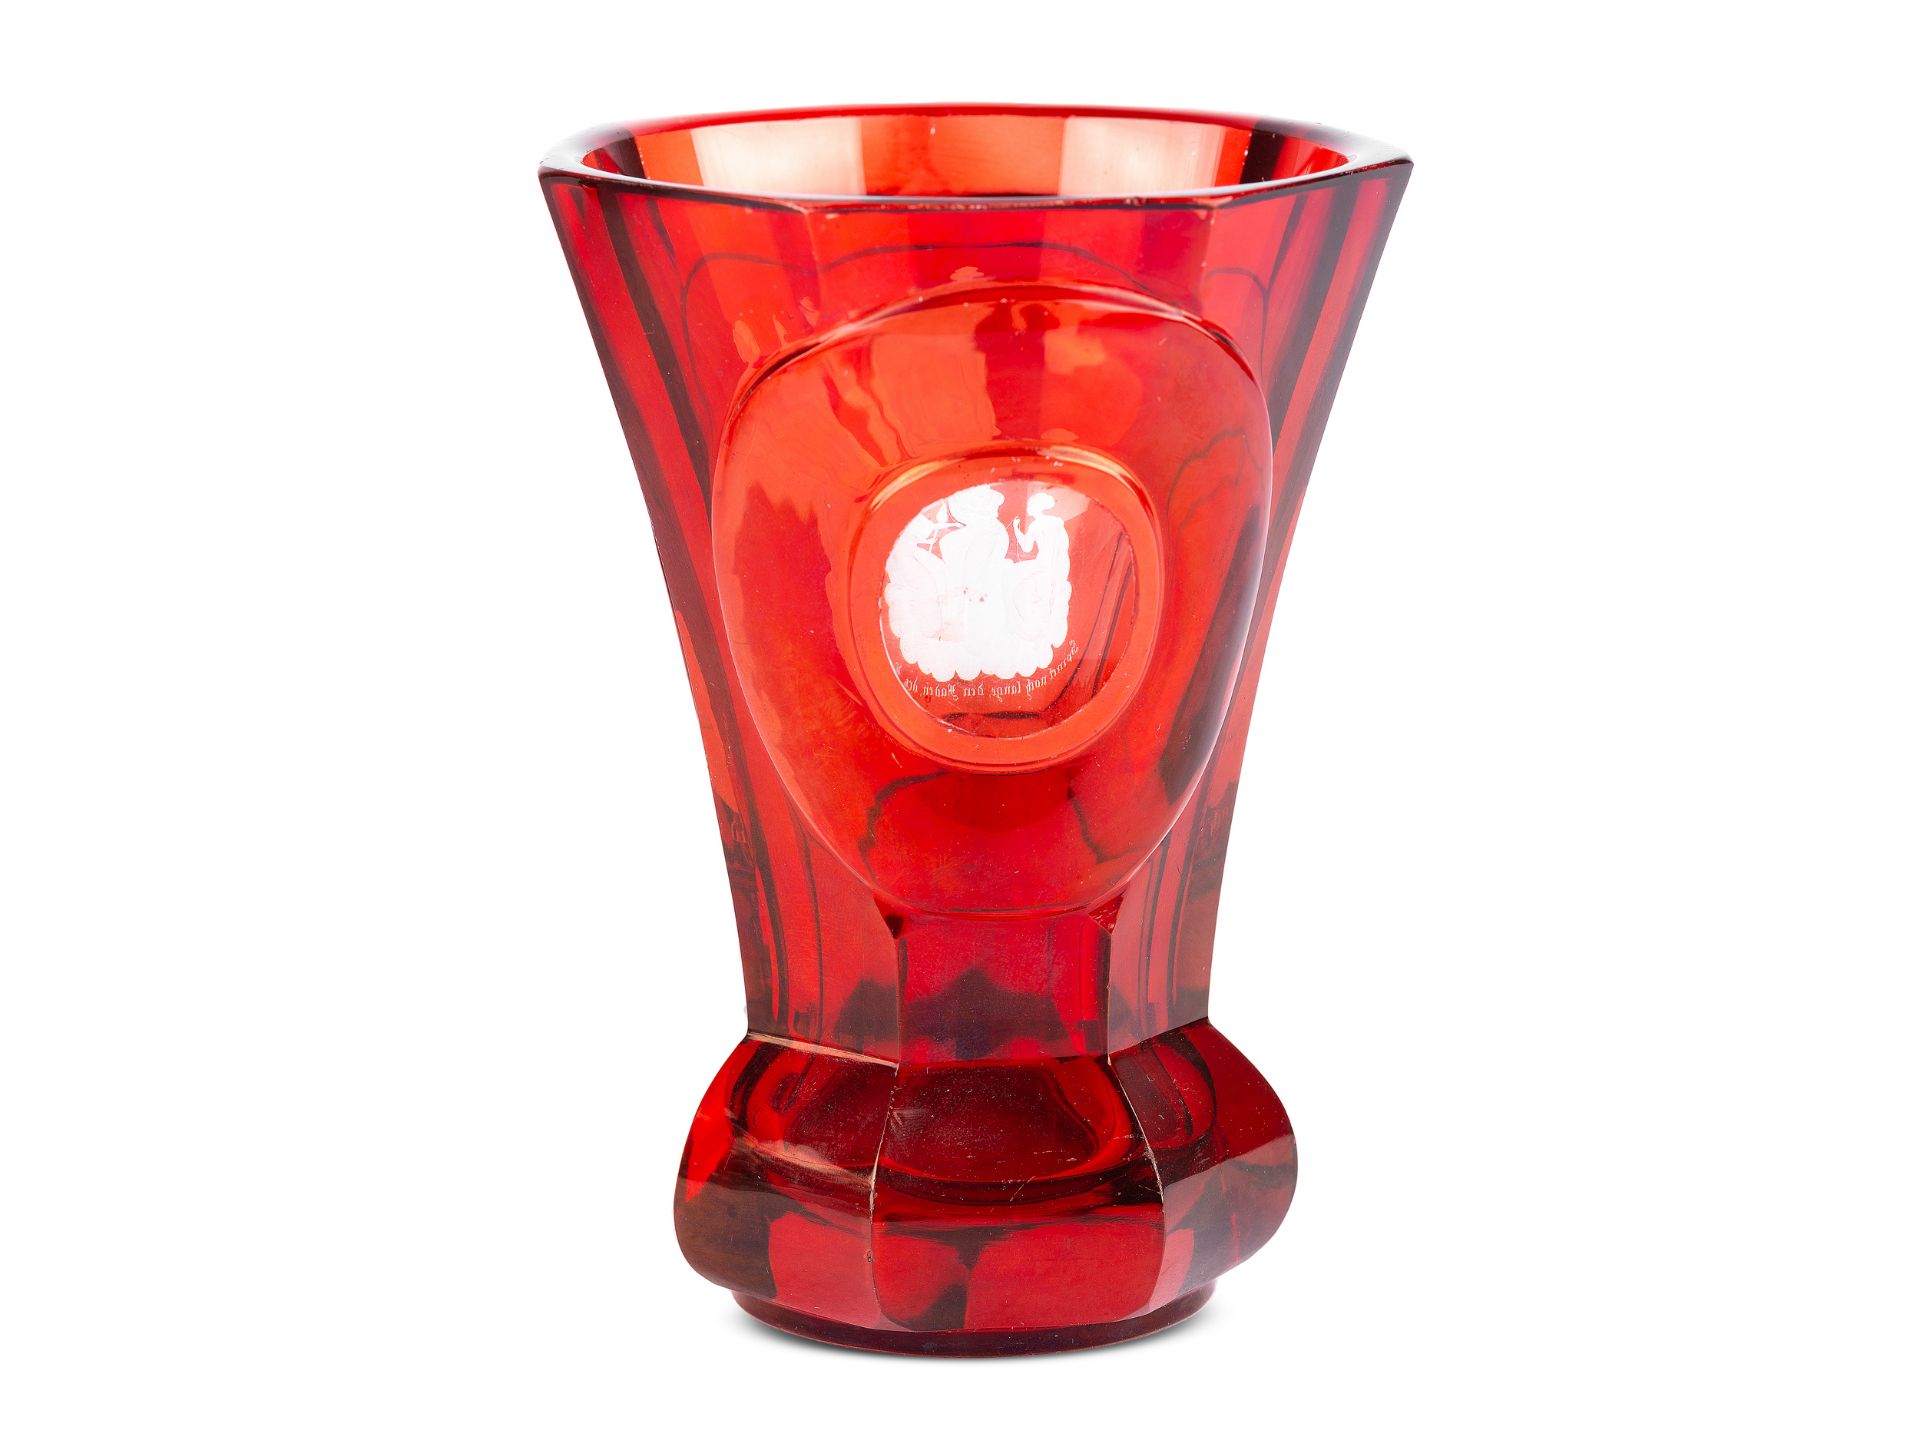 Biedermeier Glass with Goddesses of Fate (Moiren/Parzen), Red glass - Image 3 of 4